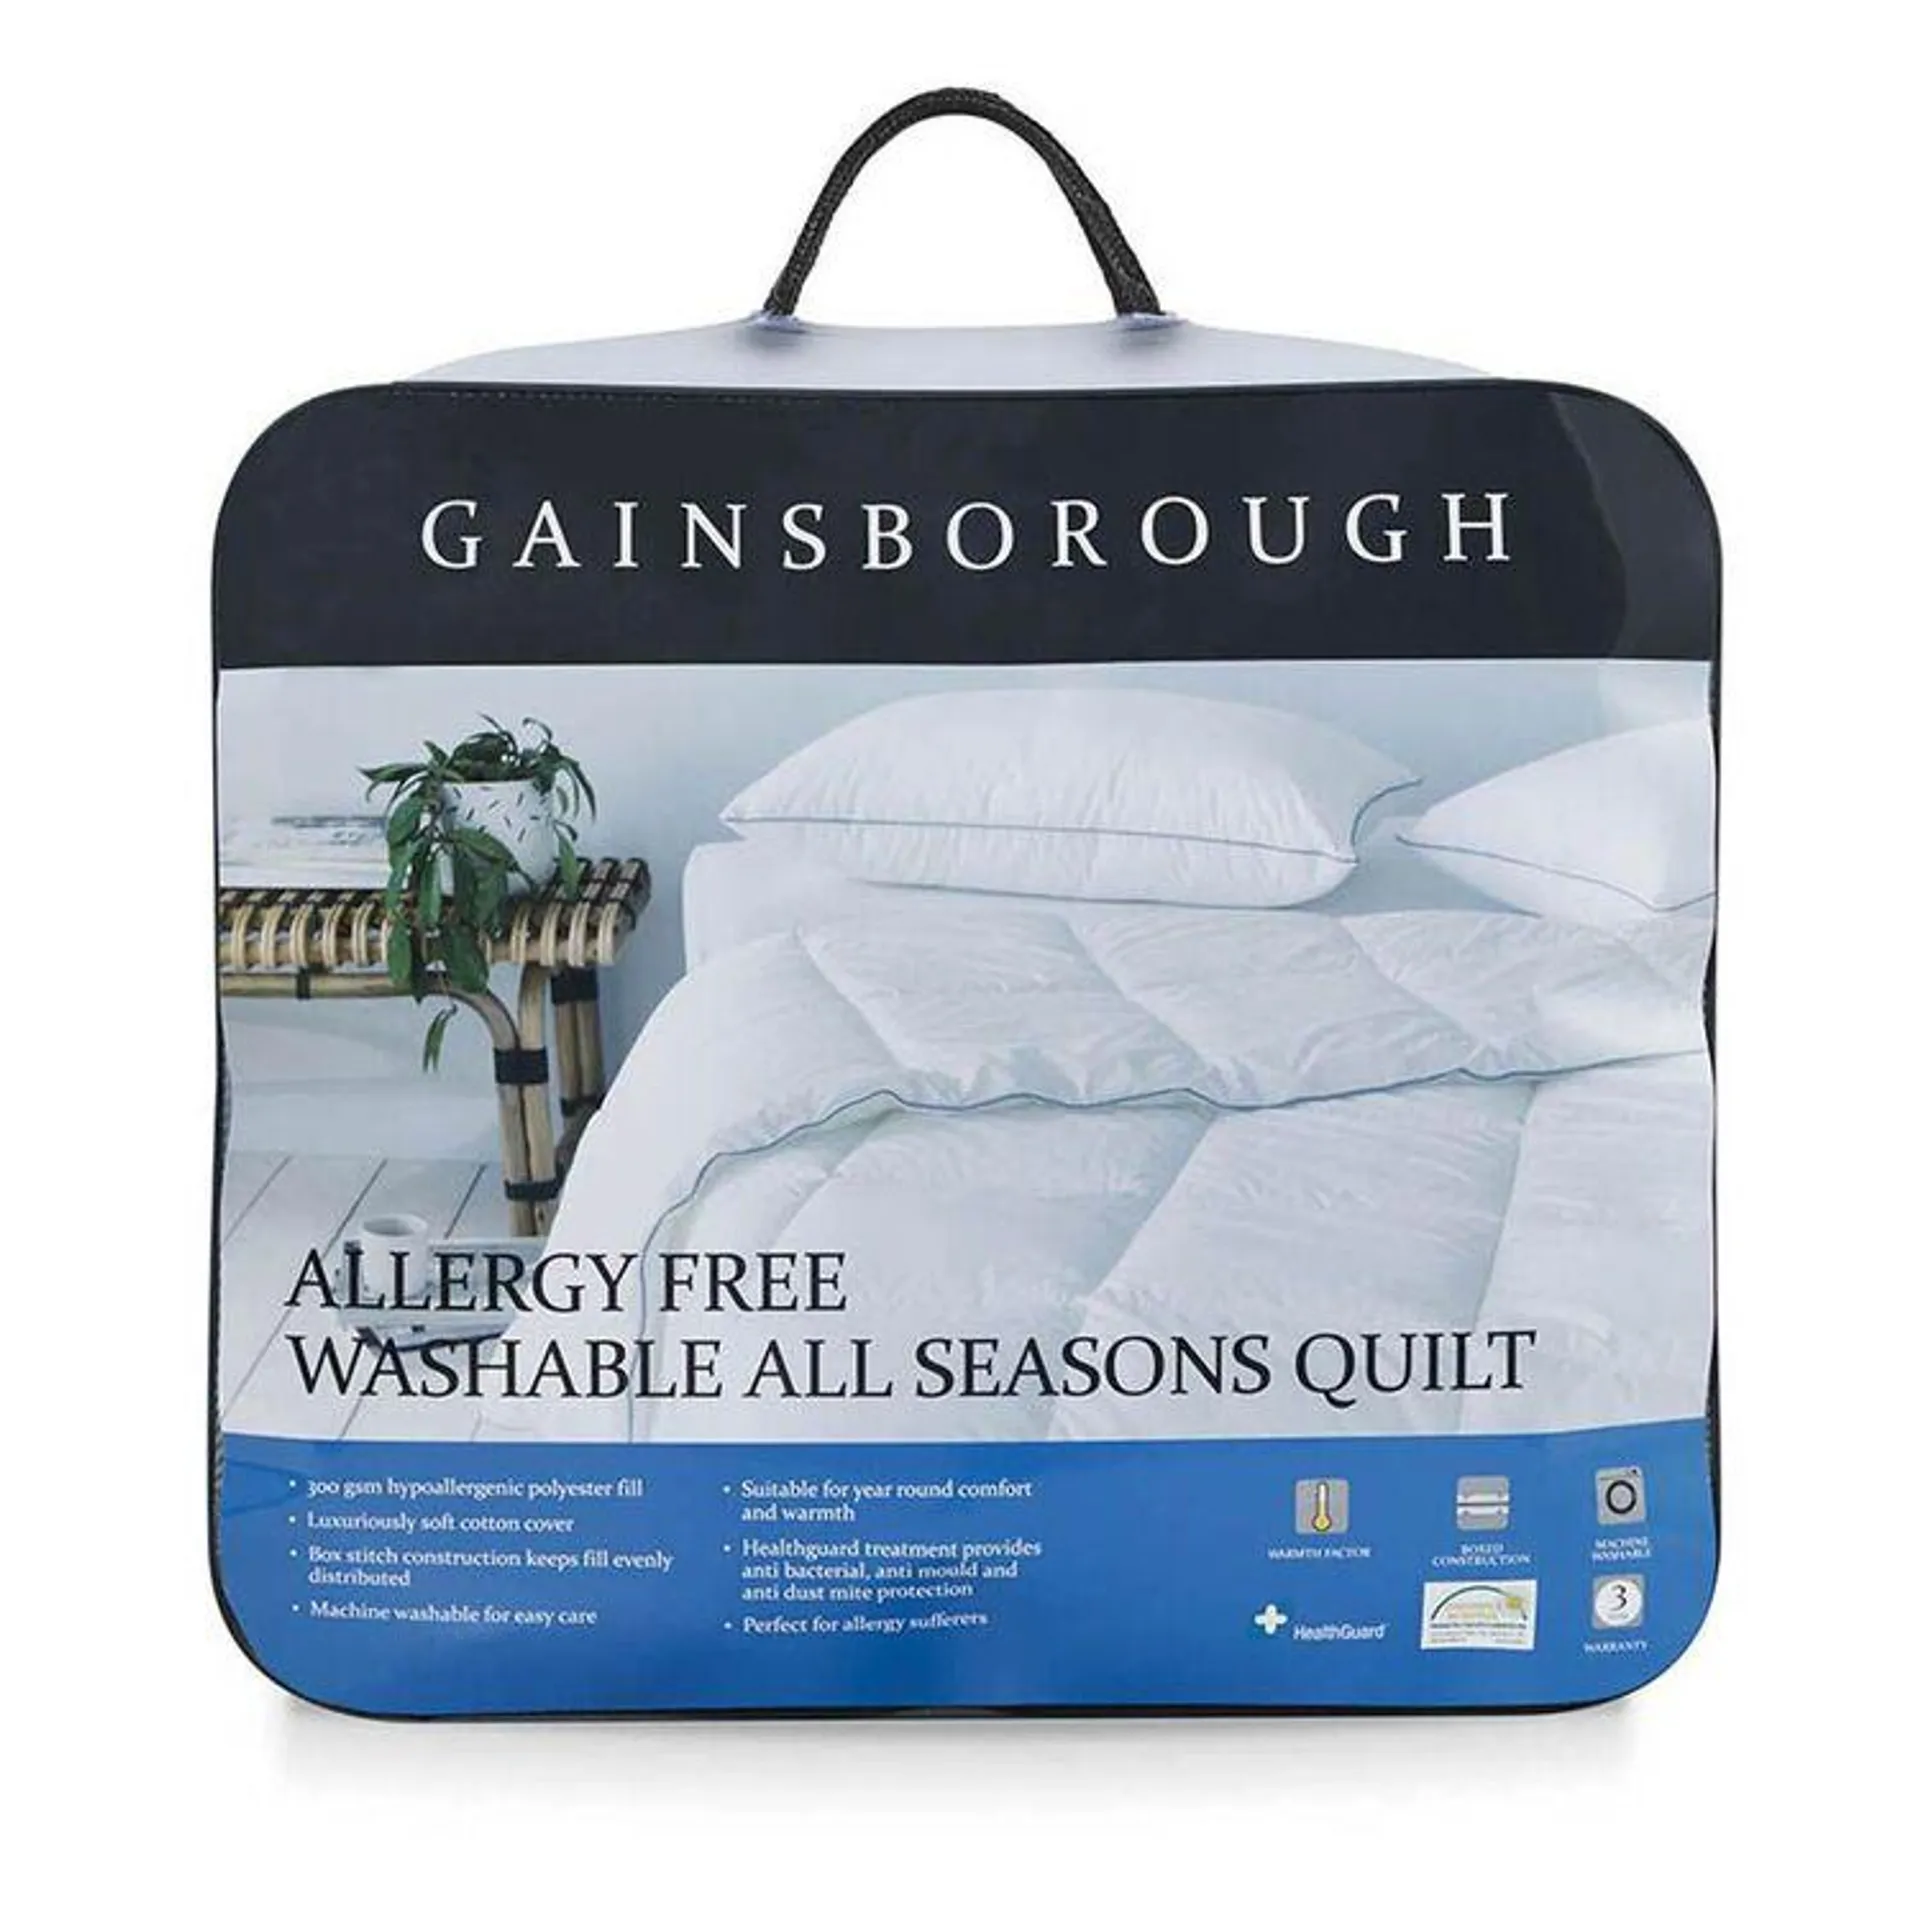 Gainsborough Allergy Free All Seasons Quilt White